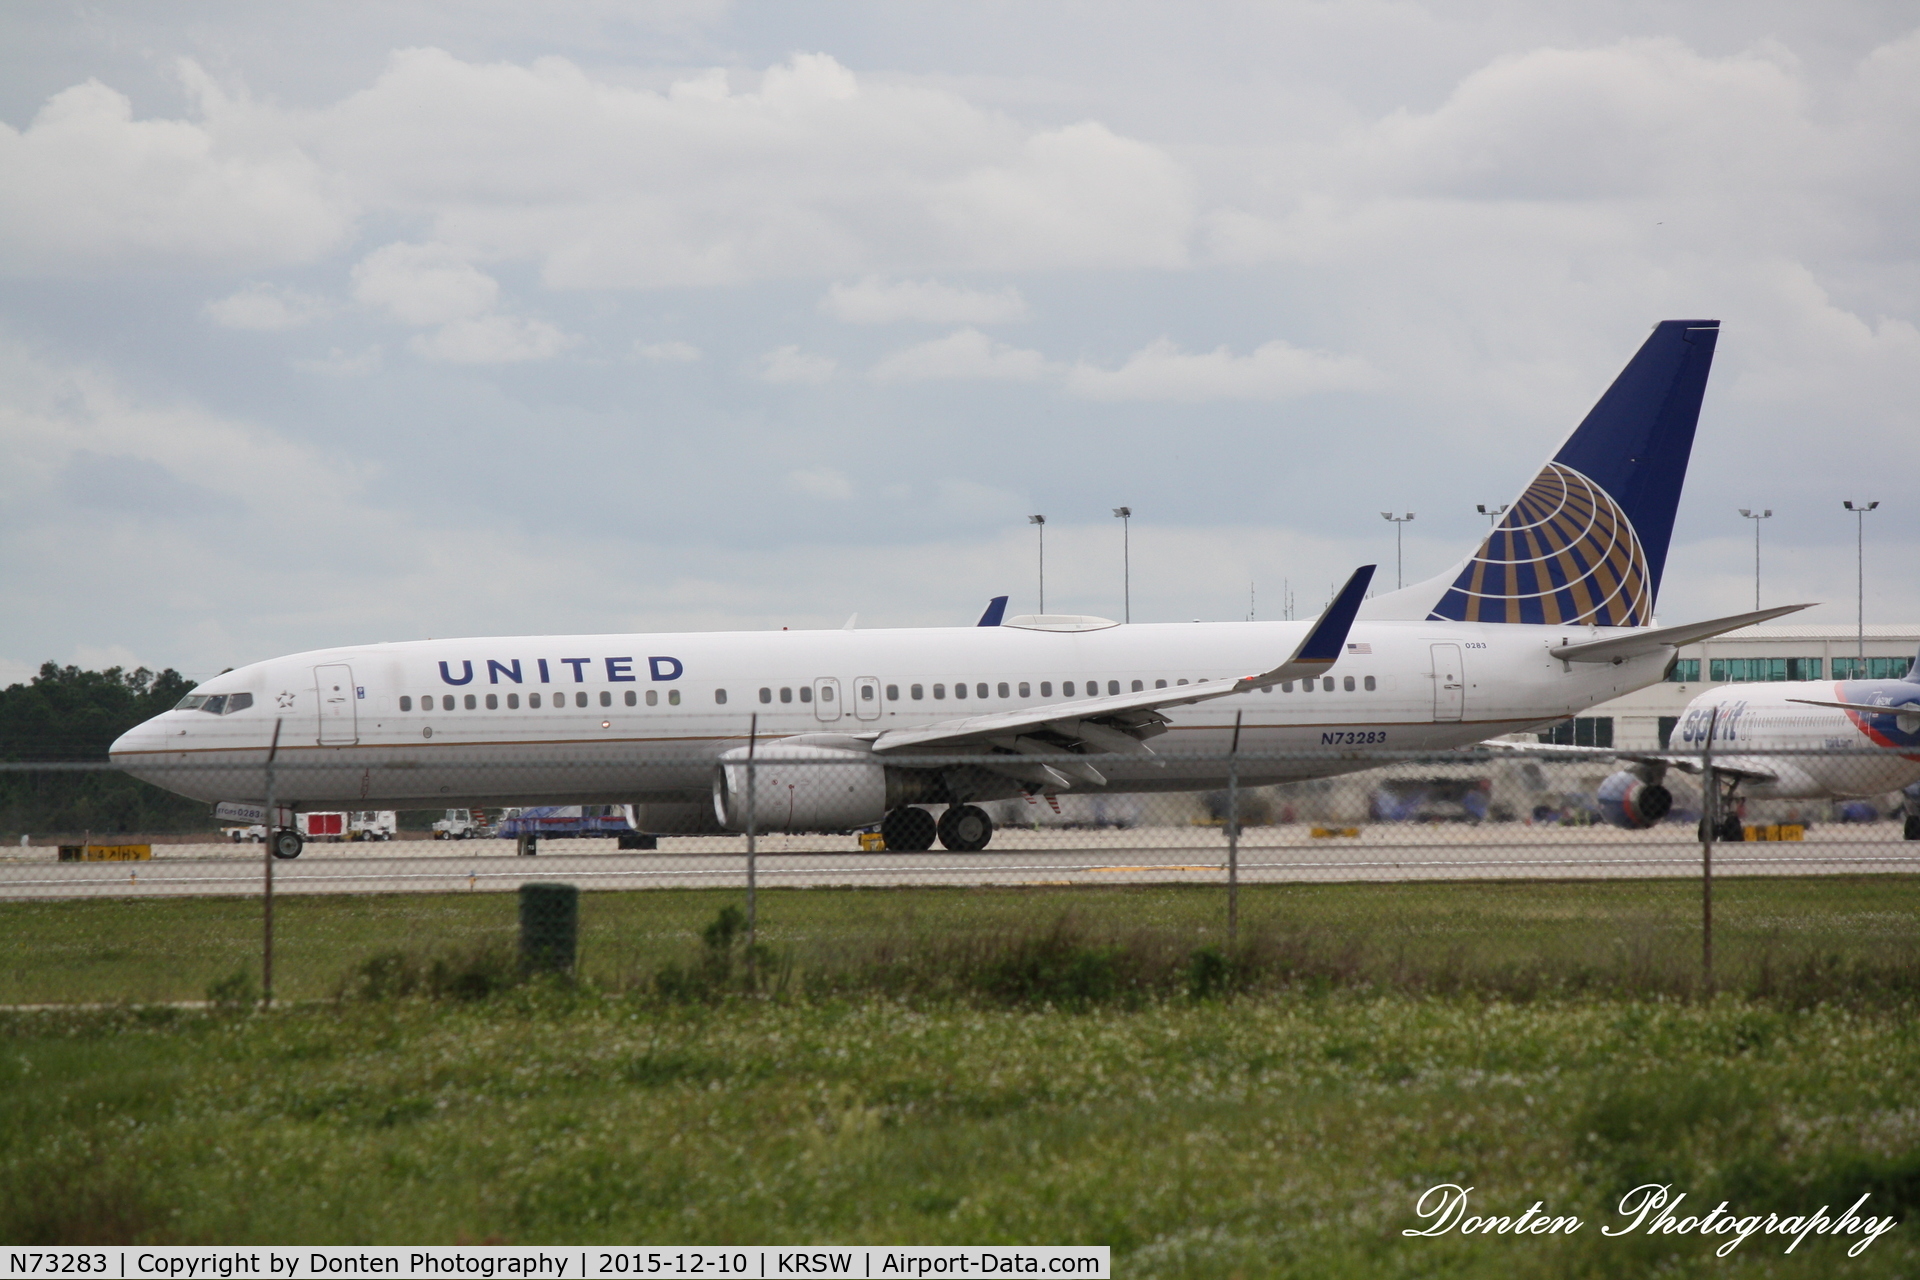 N73283, 2004 Boeing 737-824 C/N 31606, United Flight 174 (N73283) arrives at Southwest Florida International Airport following flight from Newark-Liberty International Airport